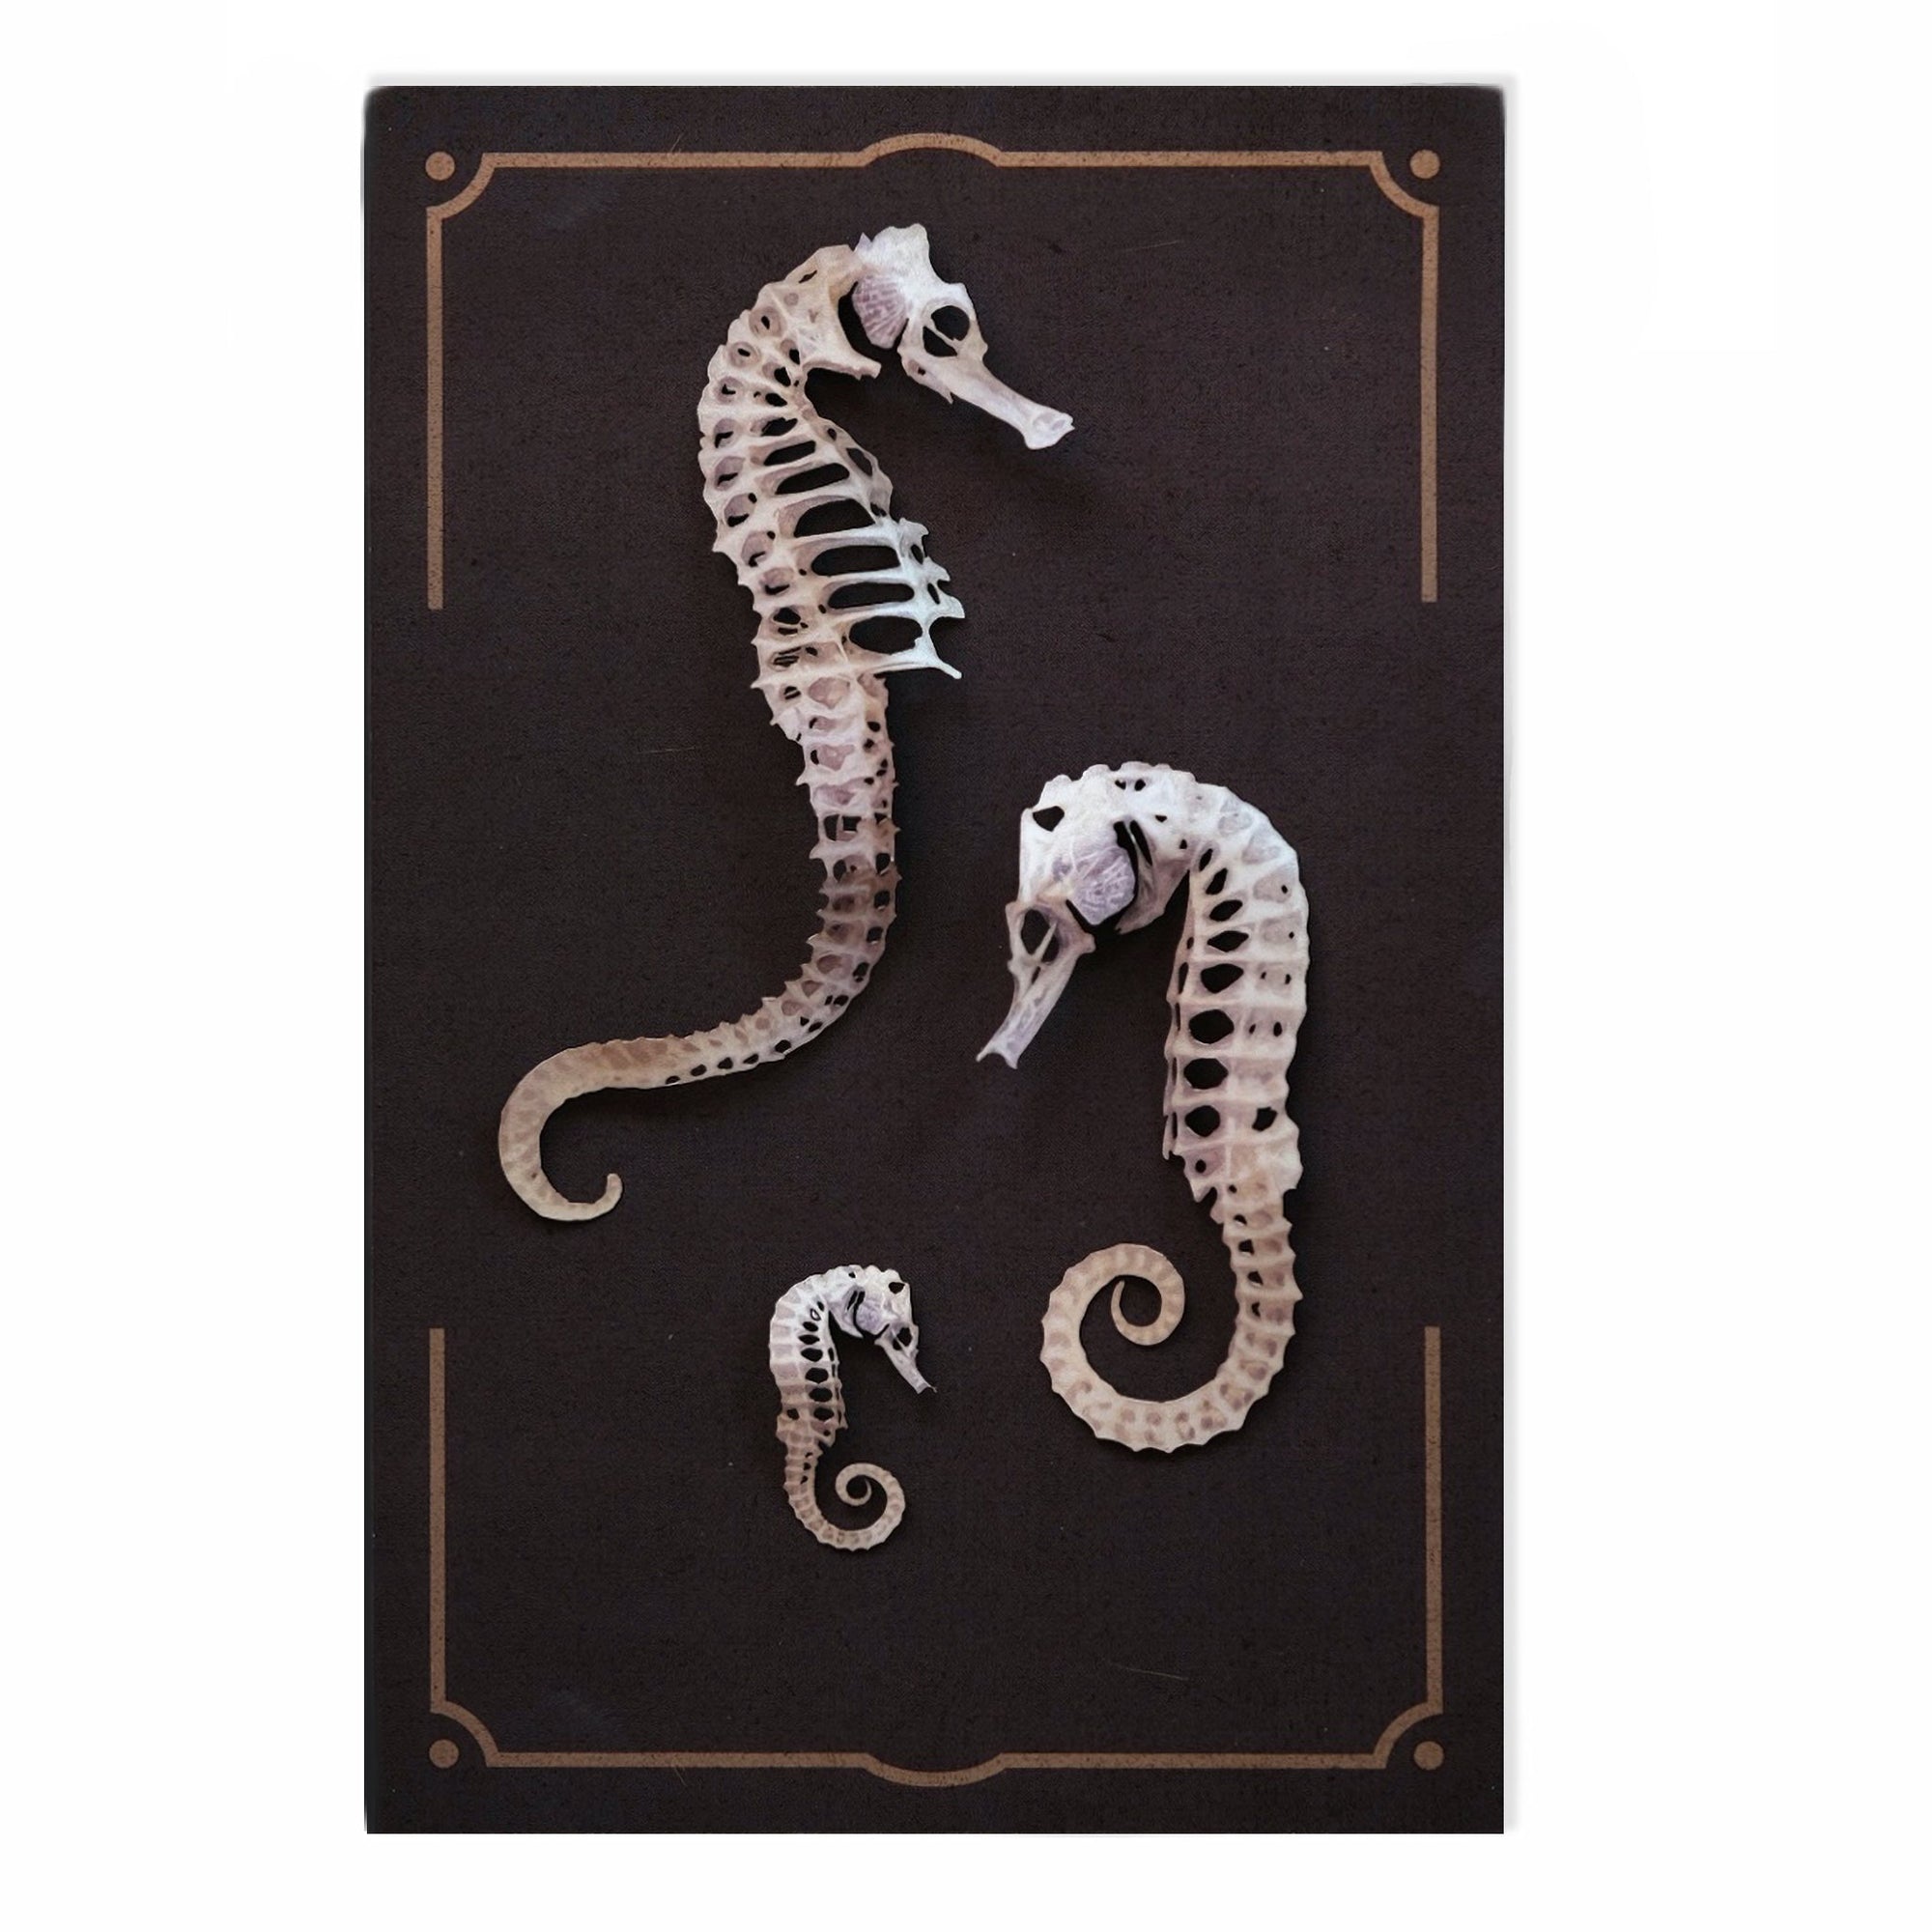 'Seafoam' Seahorse Skeleton Set Artist Wholesale